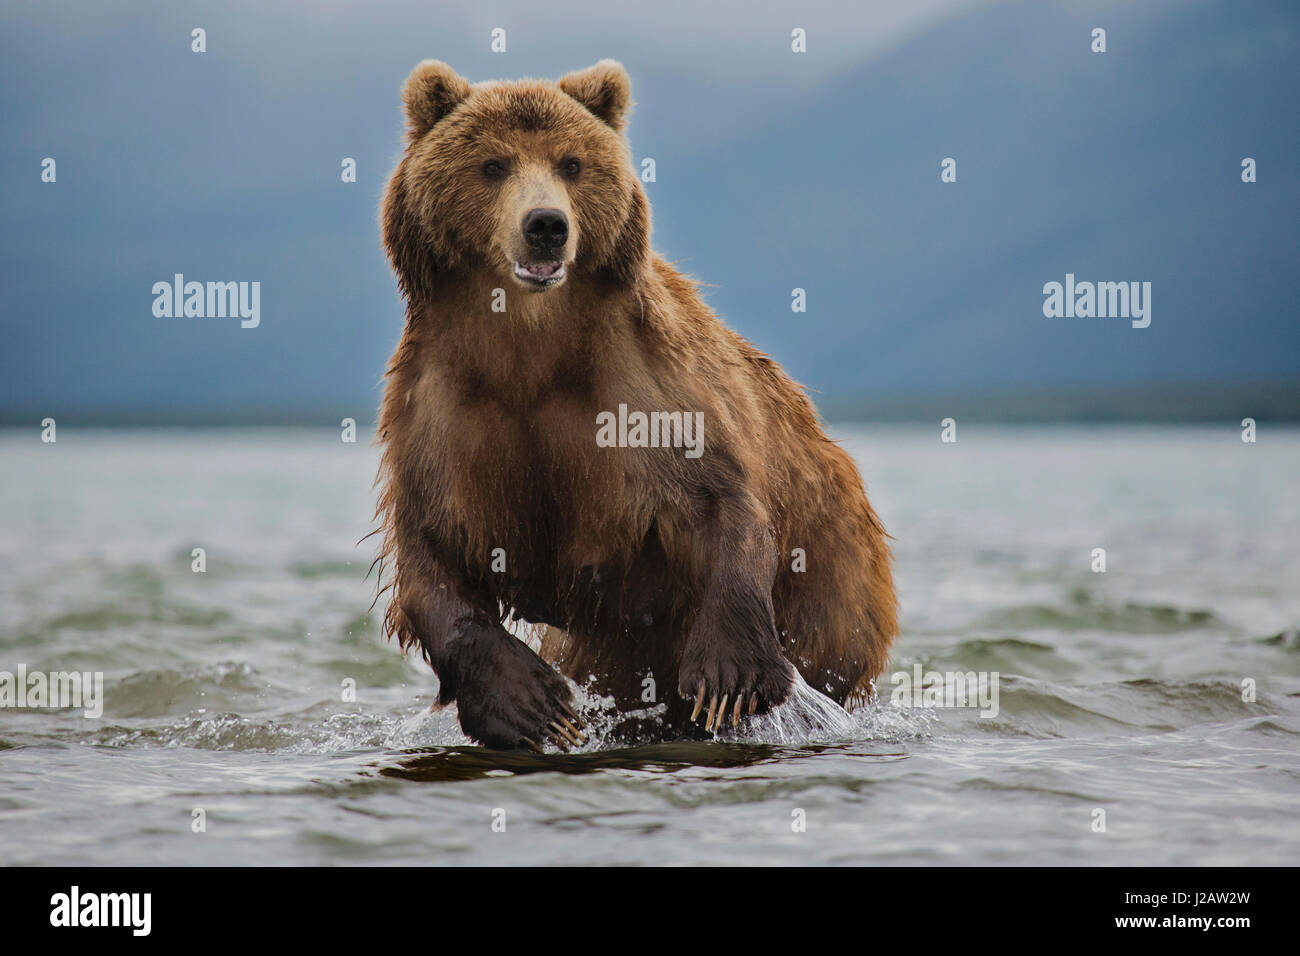 Kamchatka brown bear in lake, Kurile Lake, Kamchatka Peninsula, Russia Stock Photo